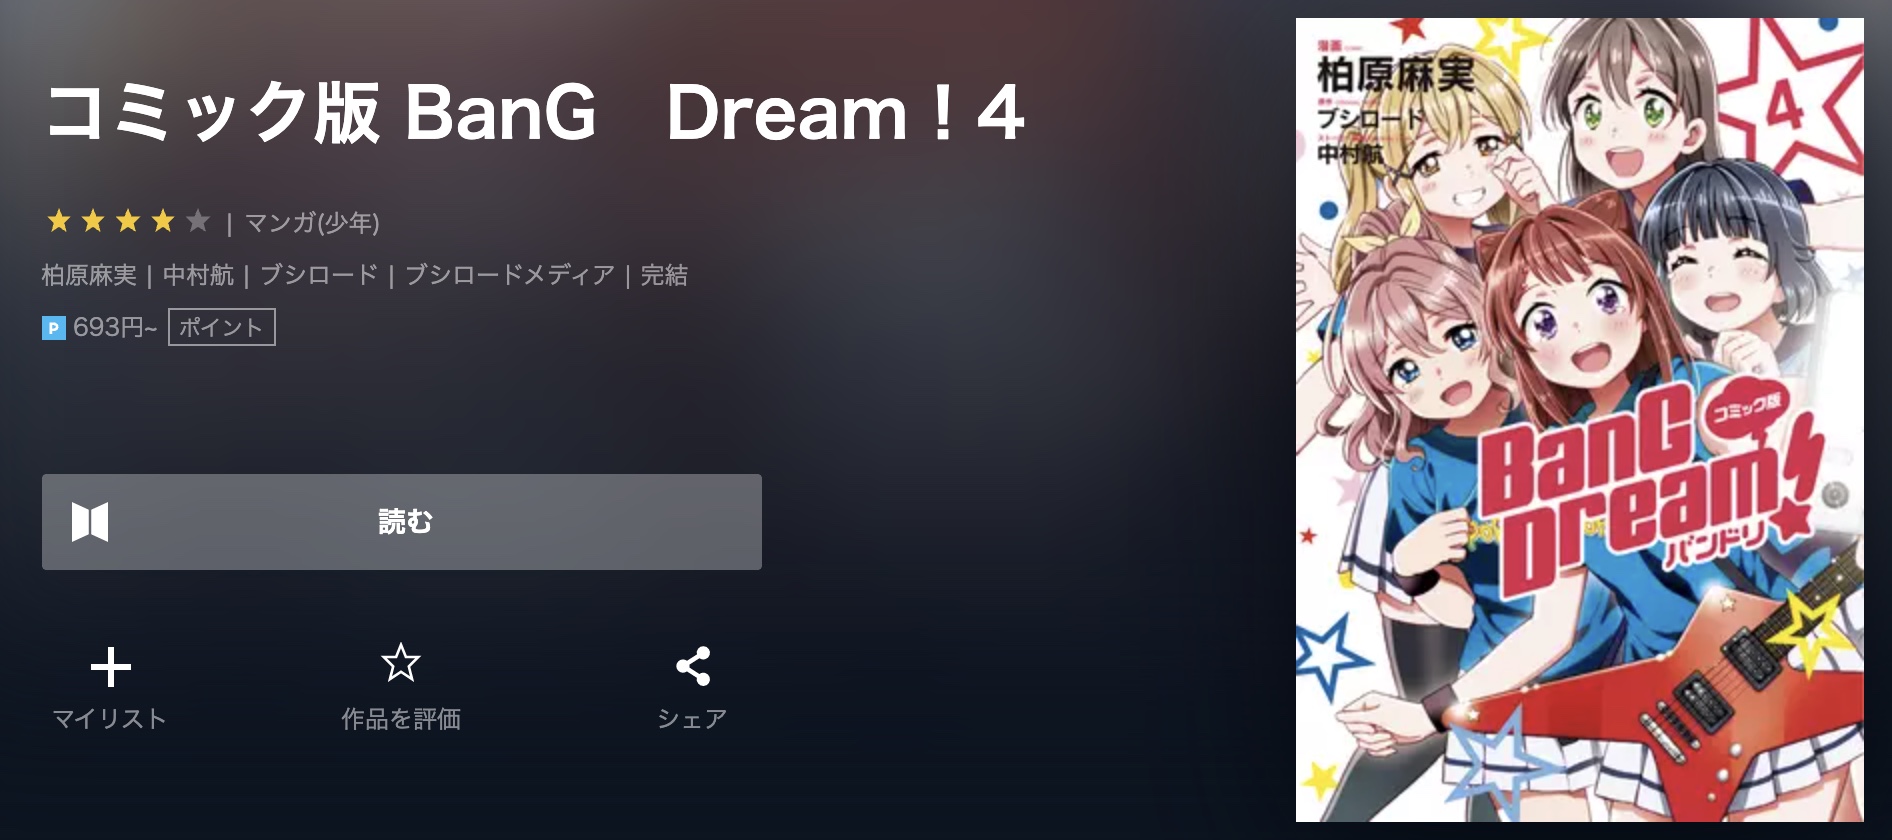 BanG Dream! u-next